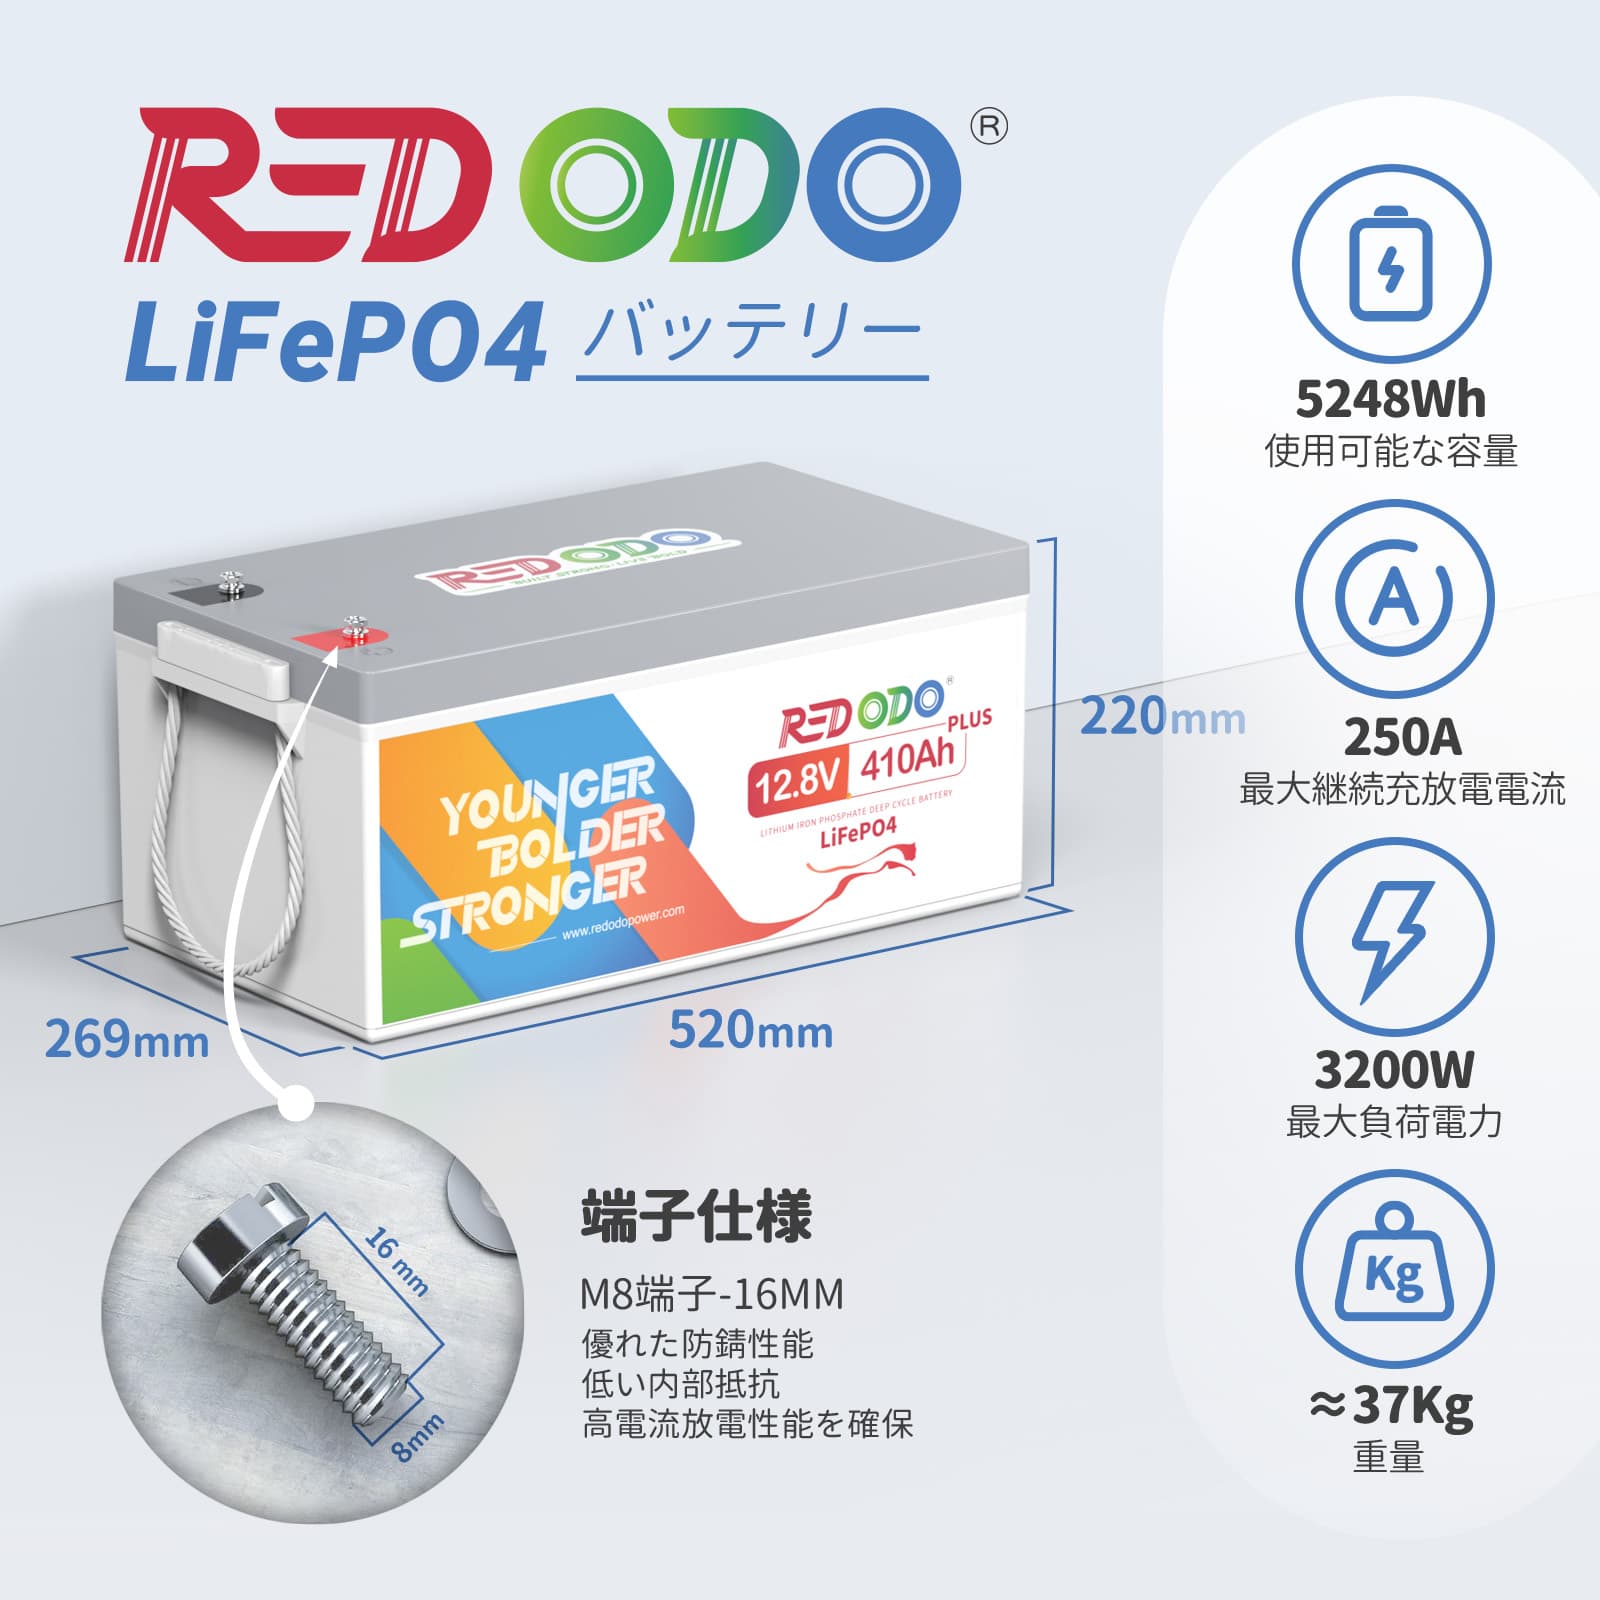 Redodo 12V 410Ah LiFePO4 Lithium Iron Phosphate Battery